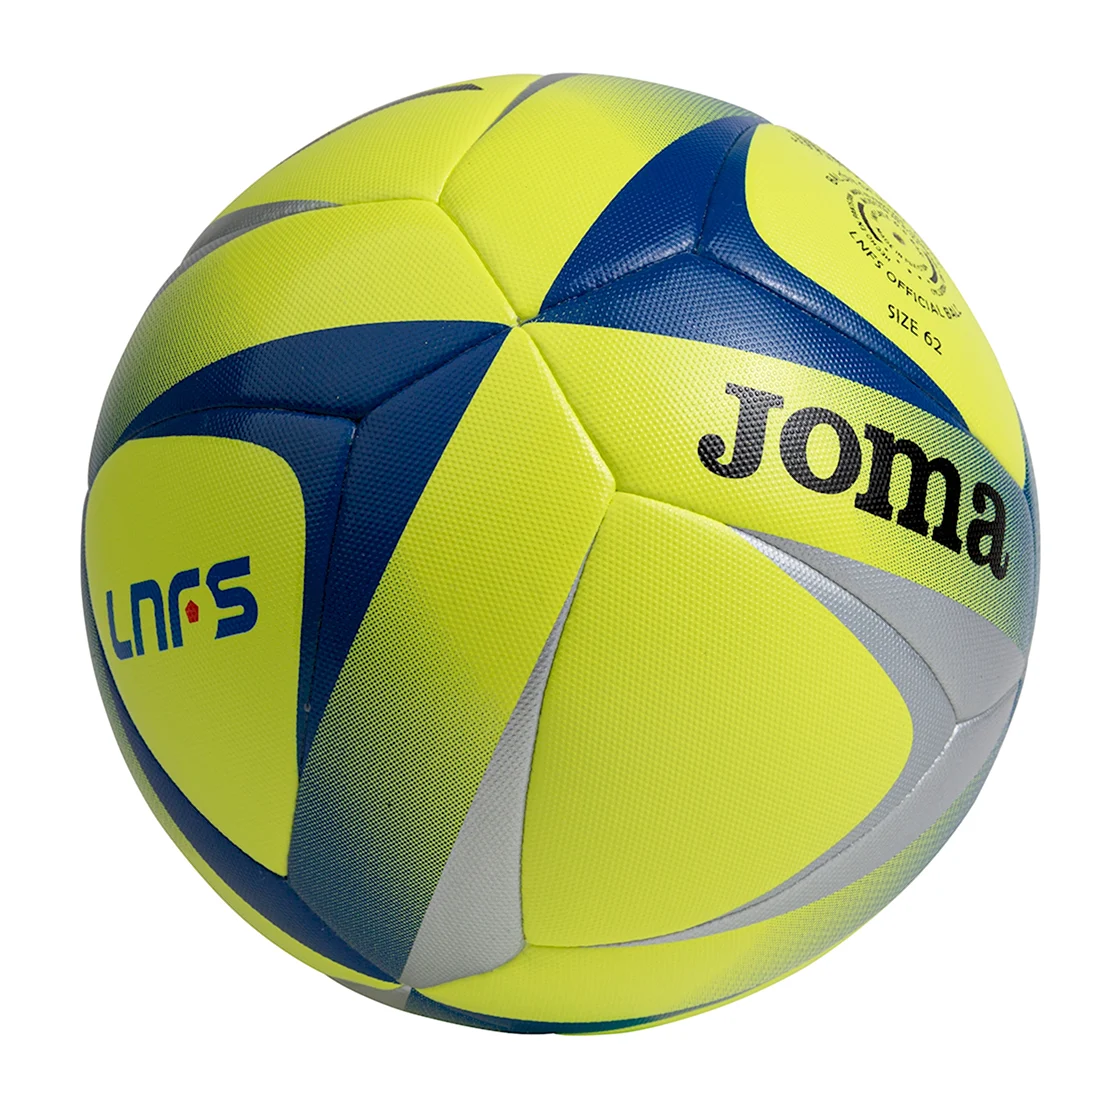 Joma Aguila f2 LNFS 400491.067 4 футзальный мяч